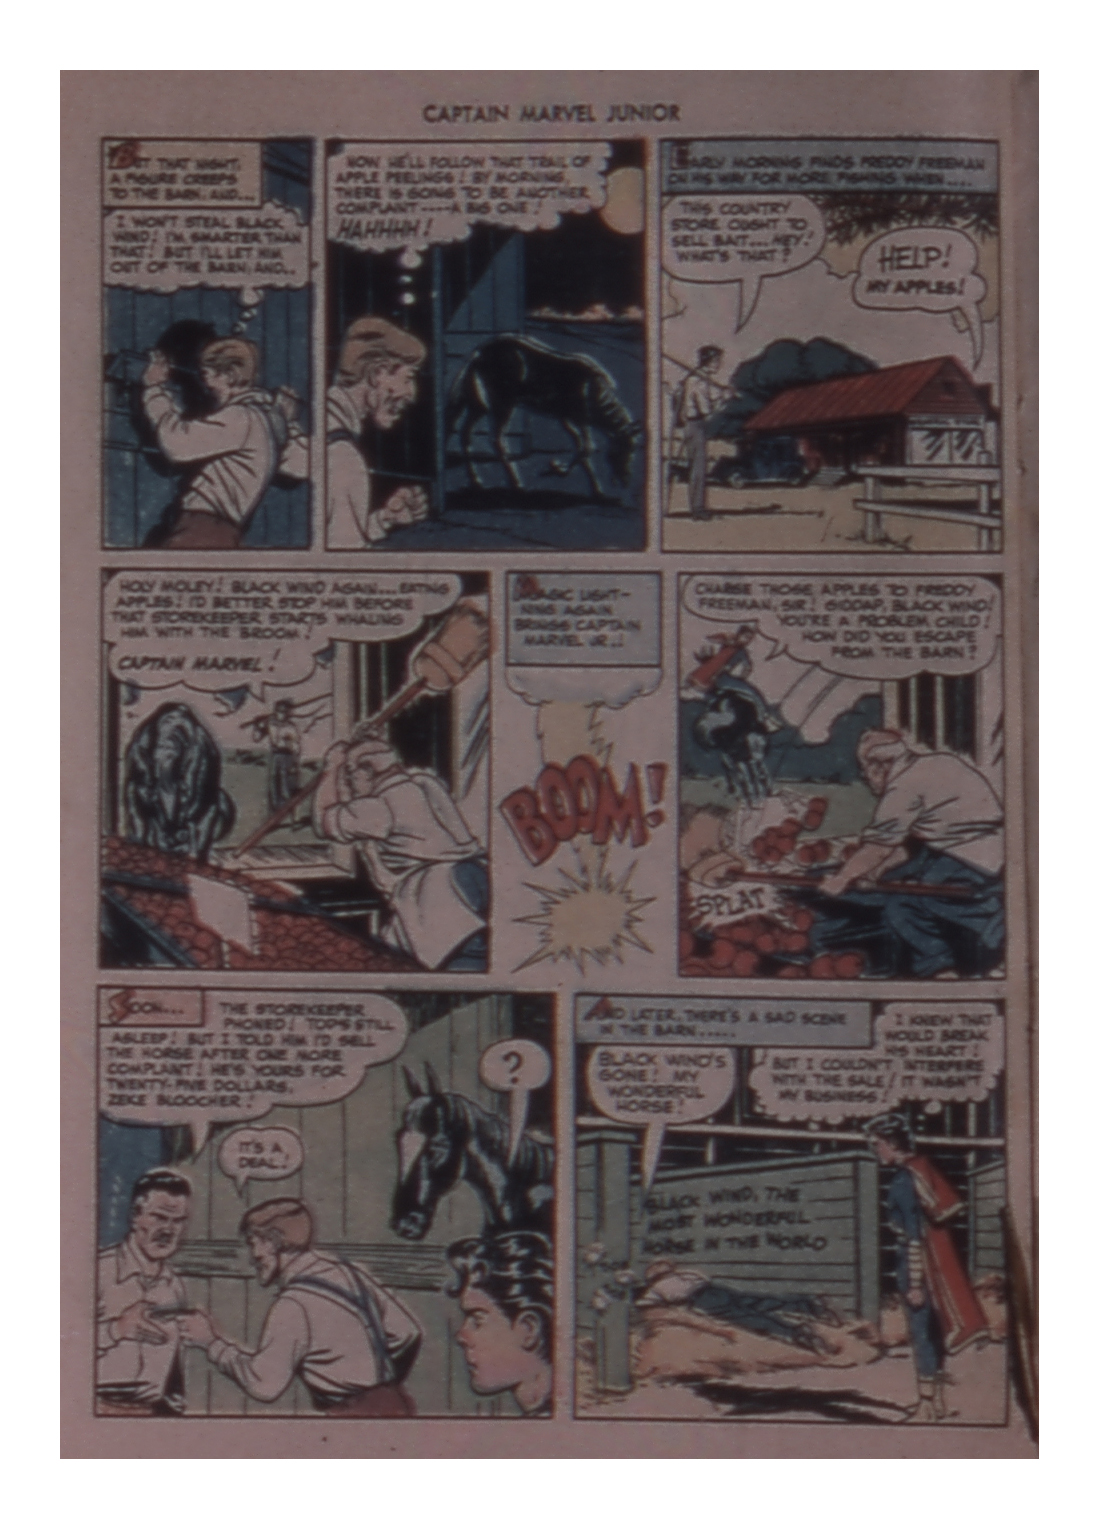 Read online Captain Marvel, Jr. comic -  Issue #80 - 20